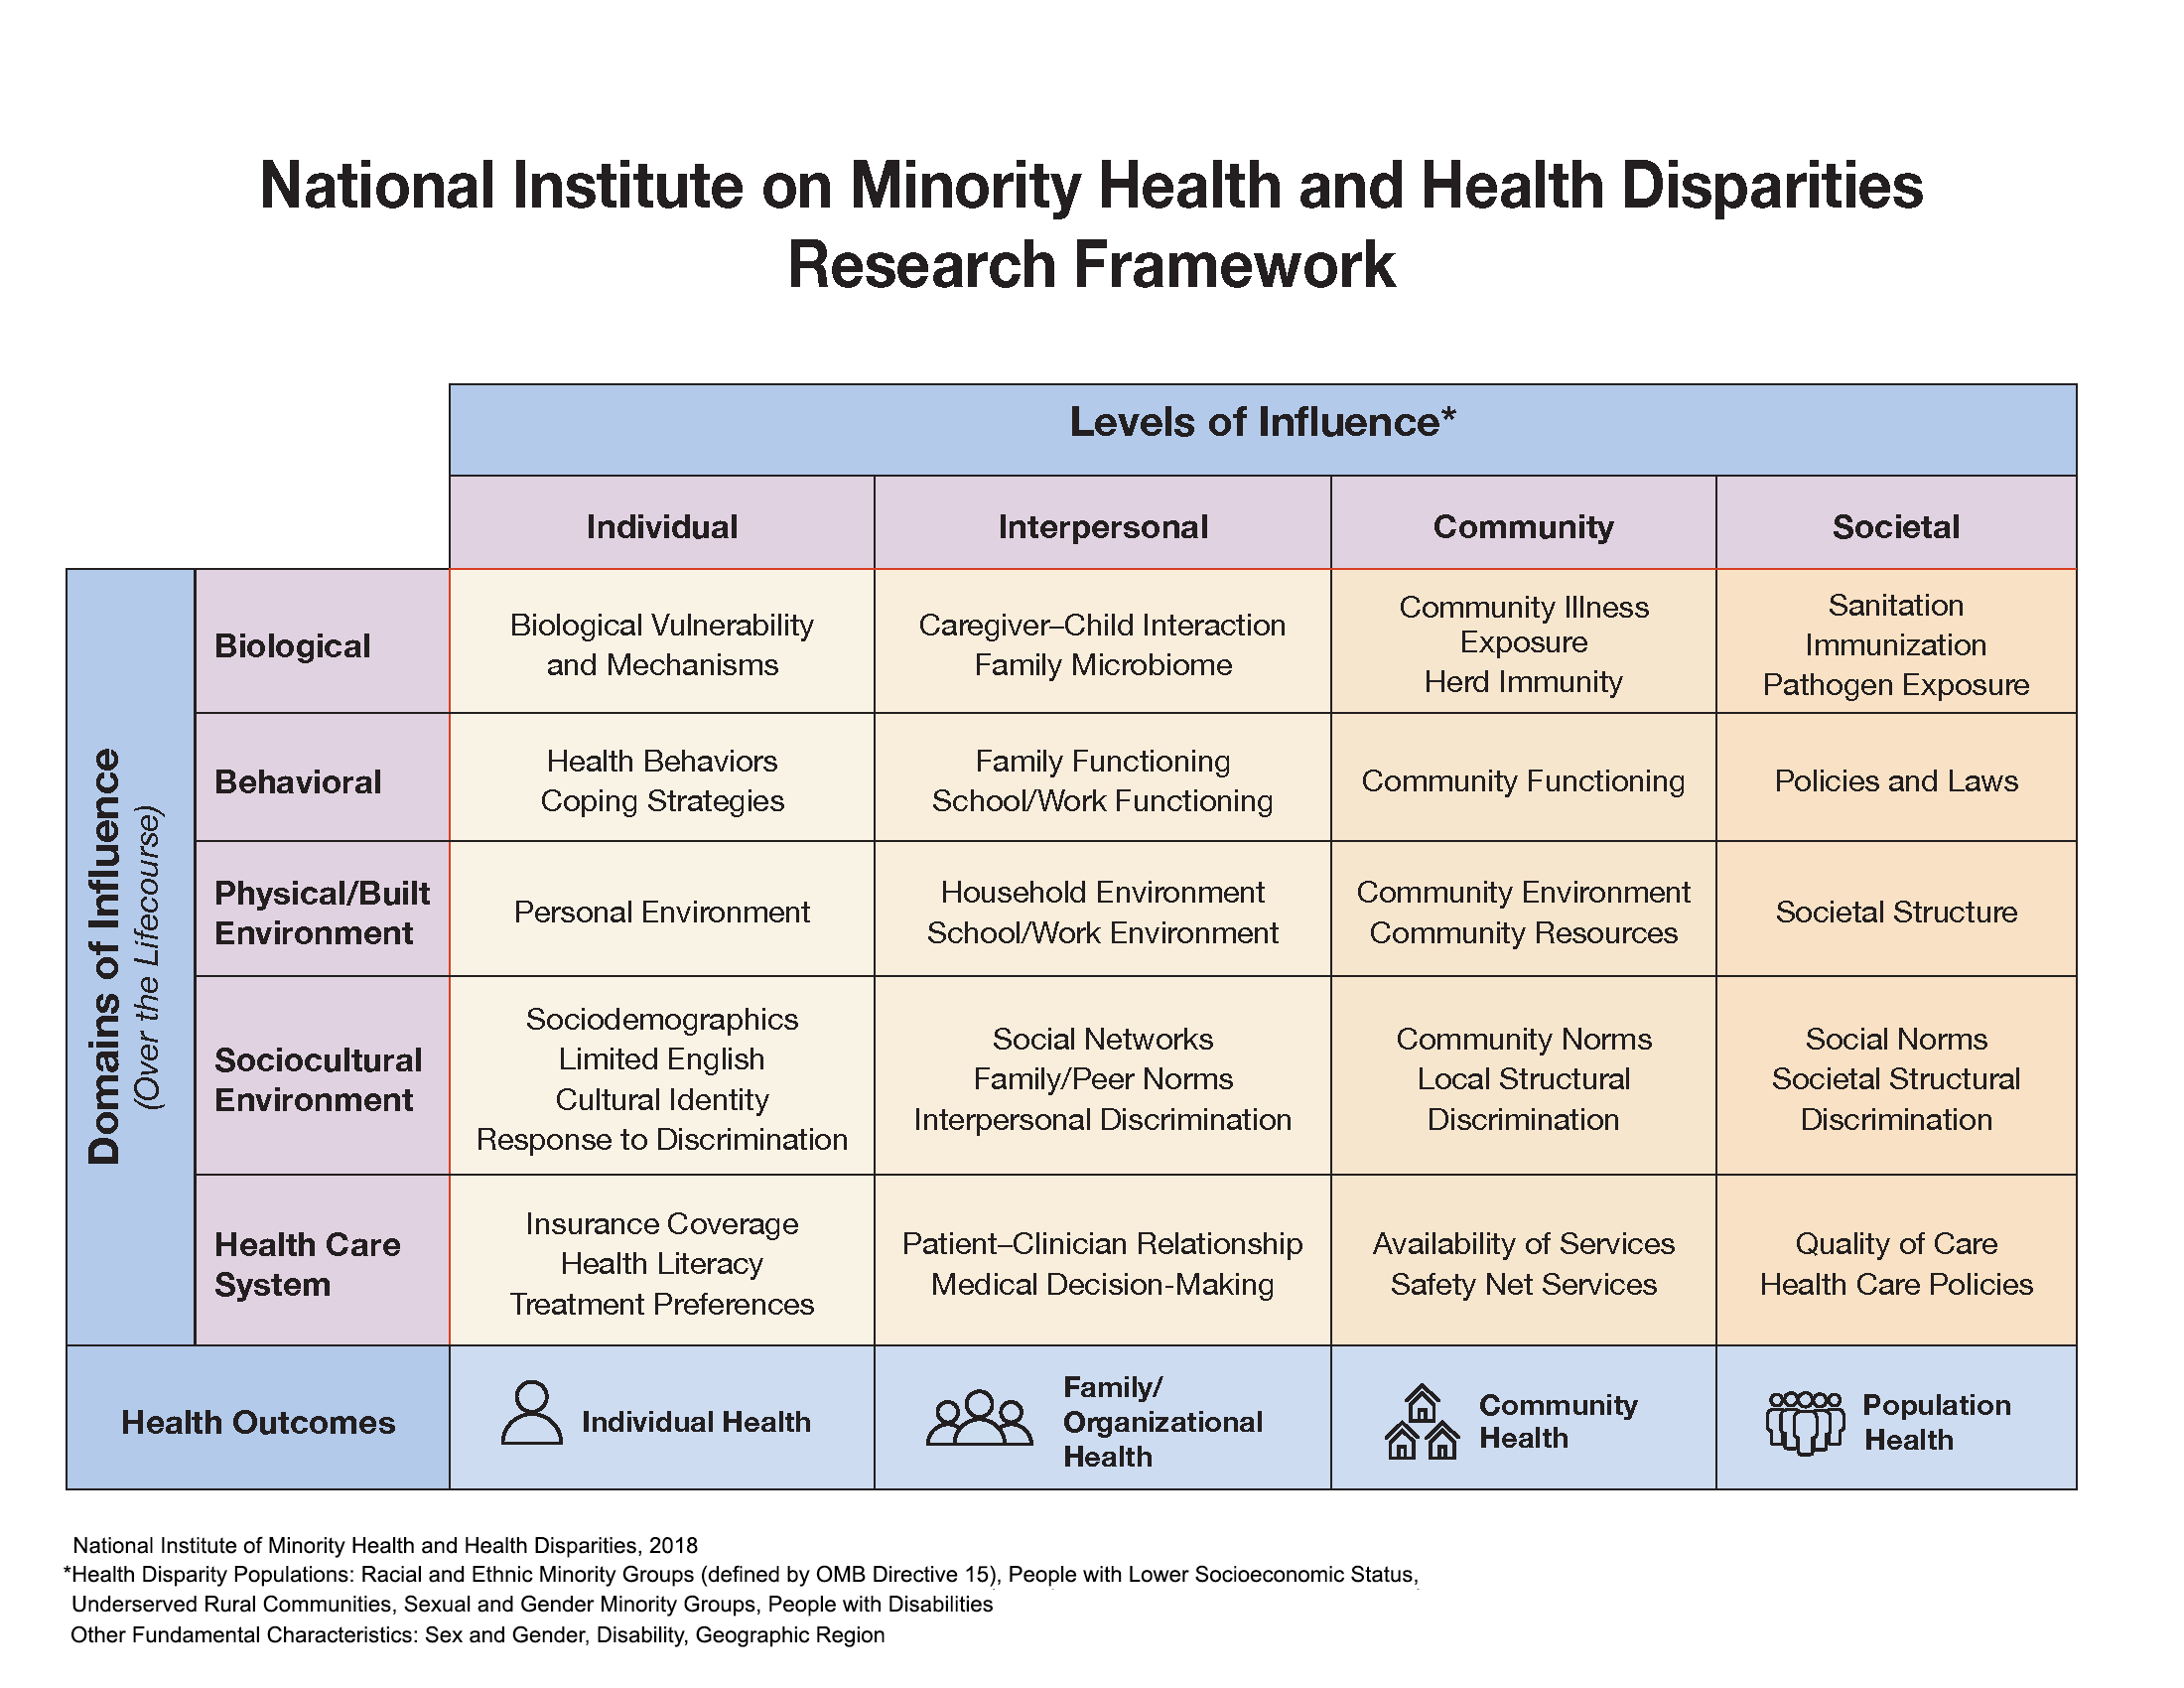 NIMHD Research Framework Details